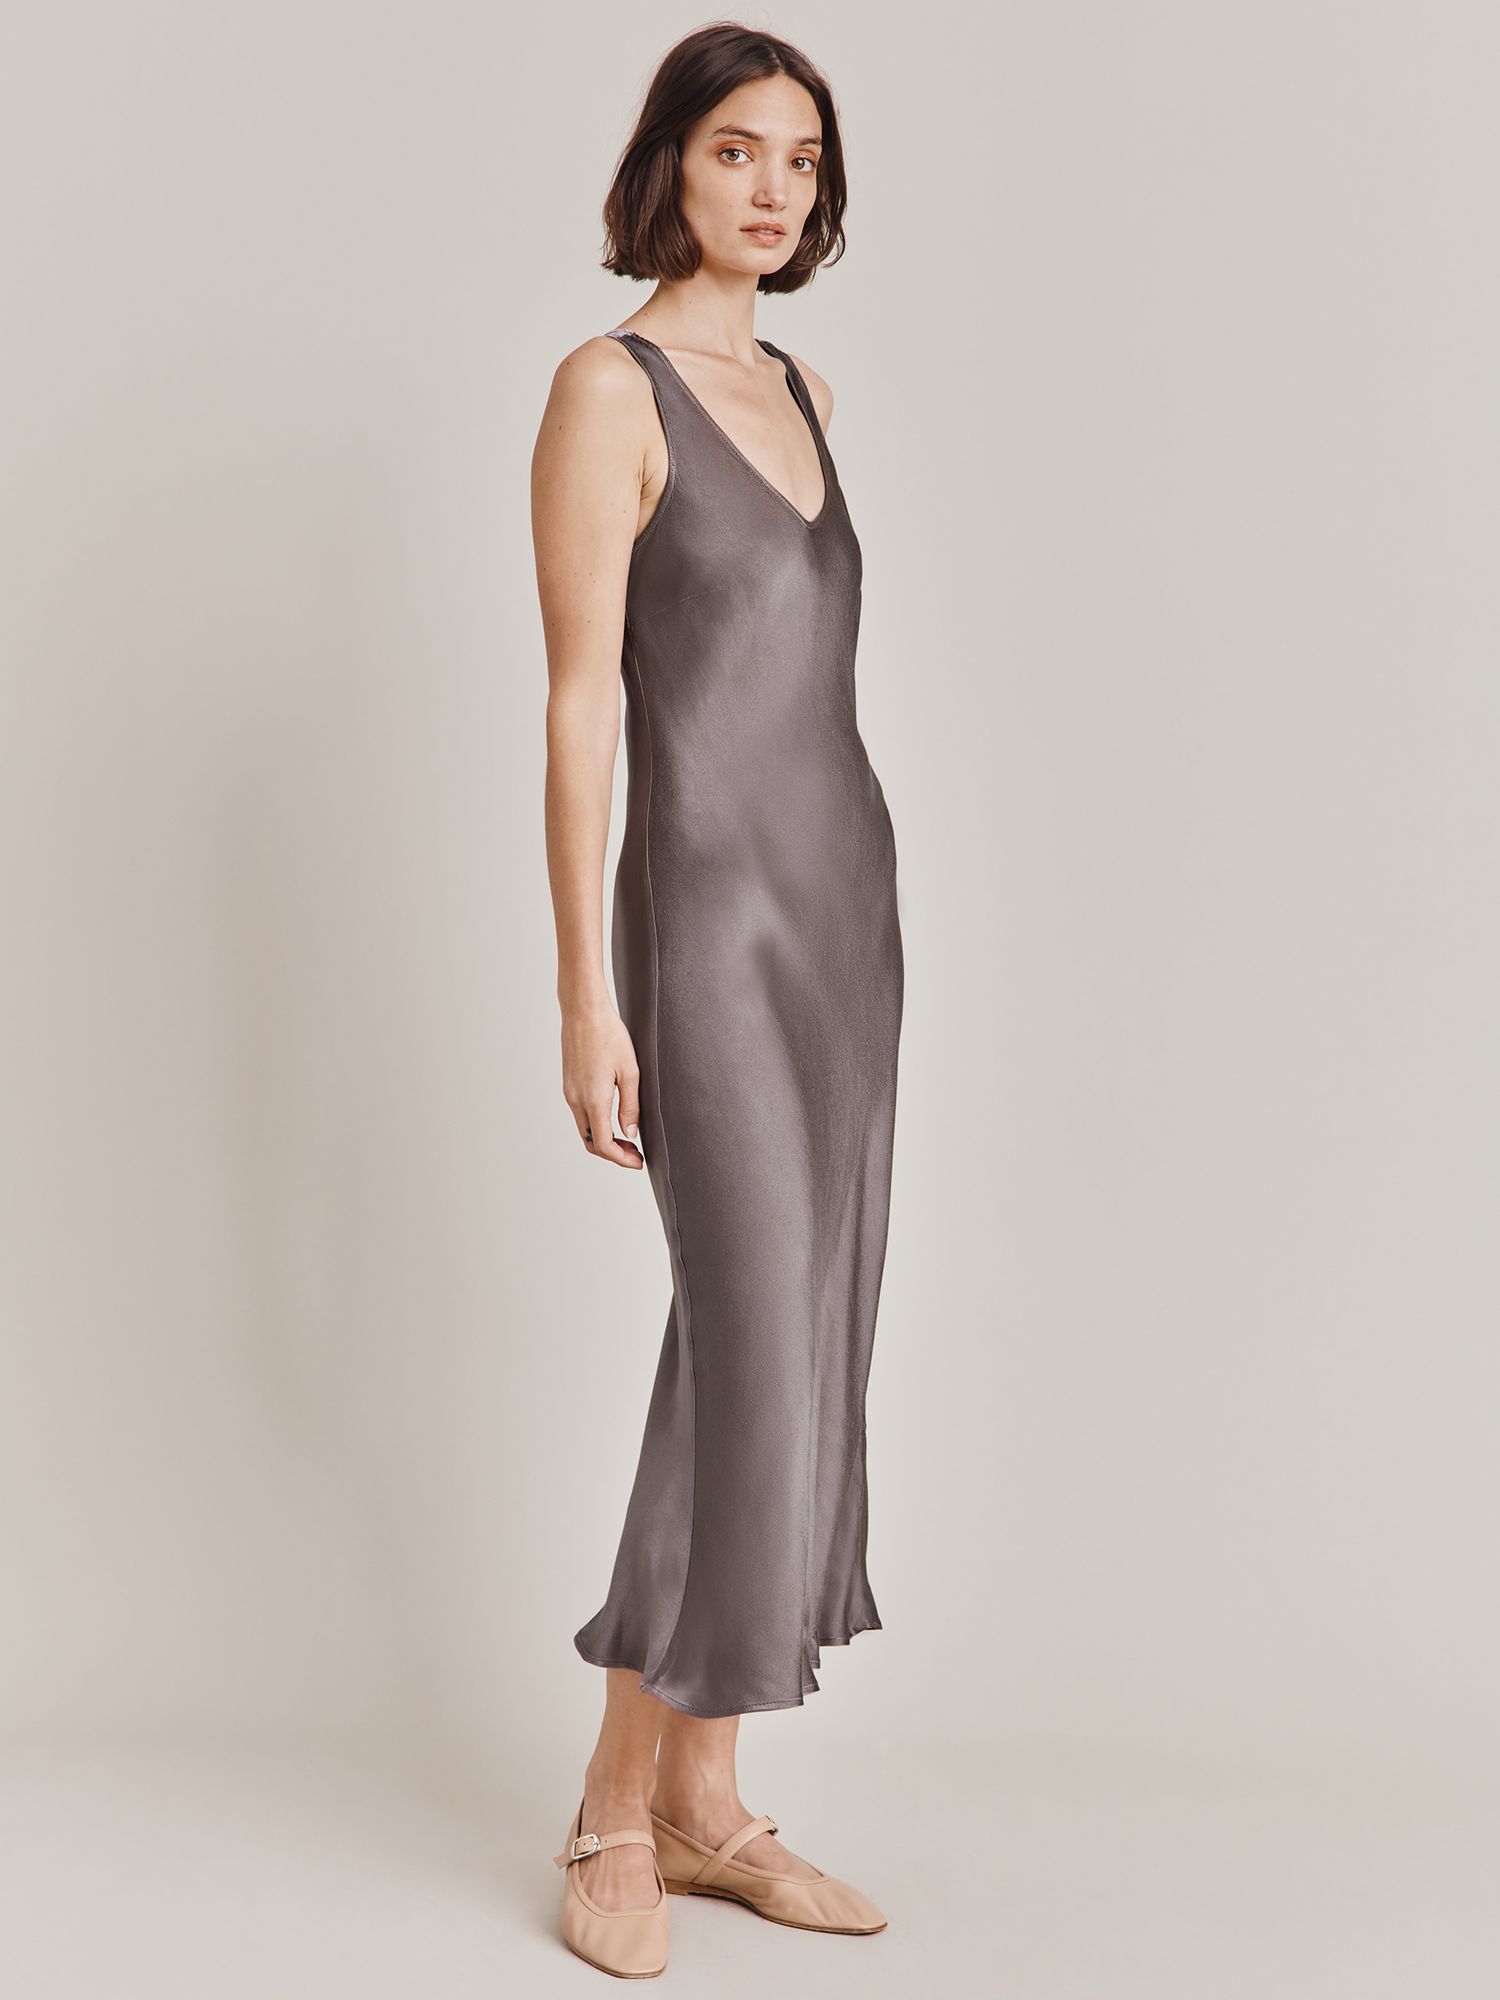 Ghost Palm Bias Cut Satin Slip Dress, Grey at John Lewis & Partners